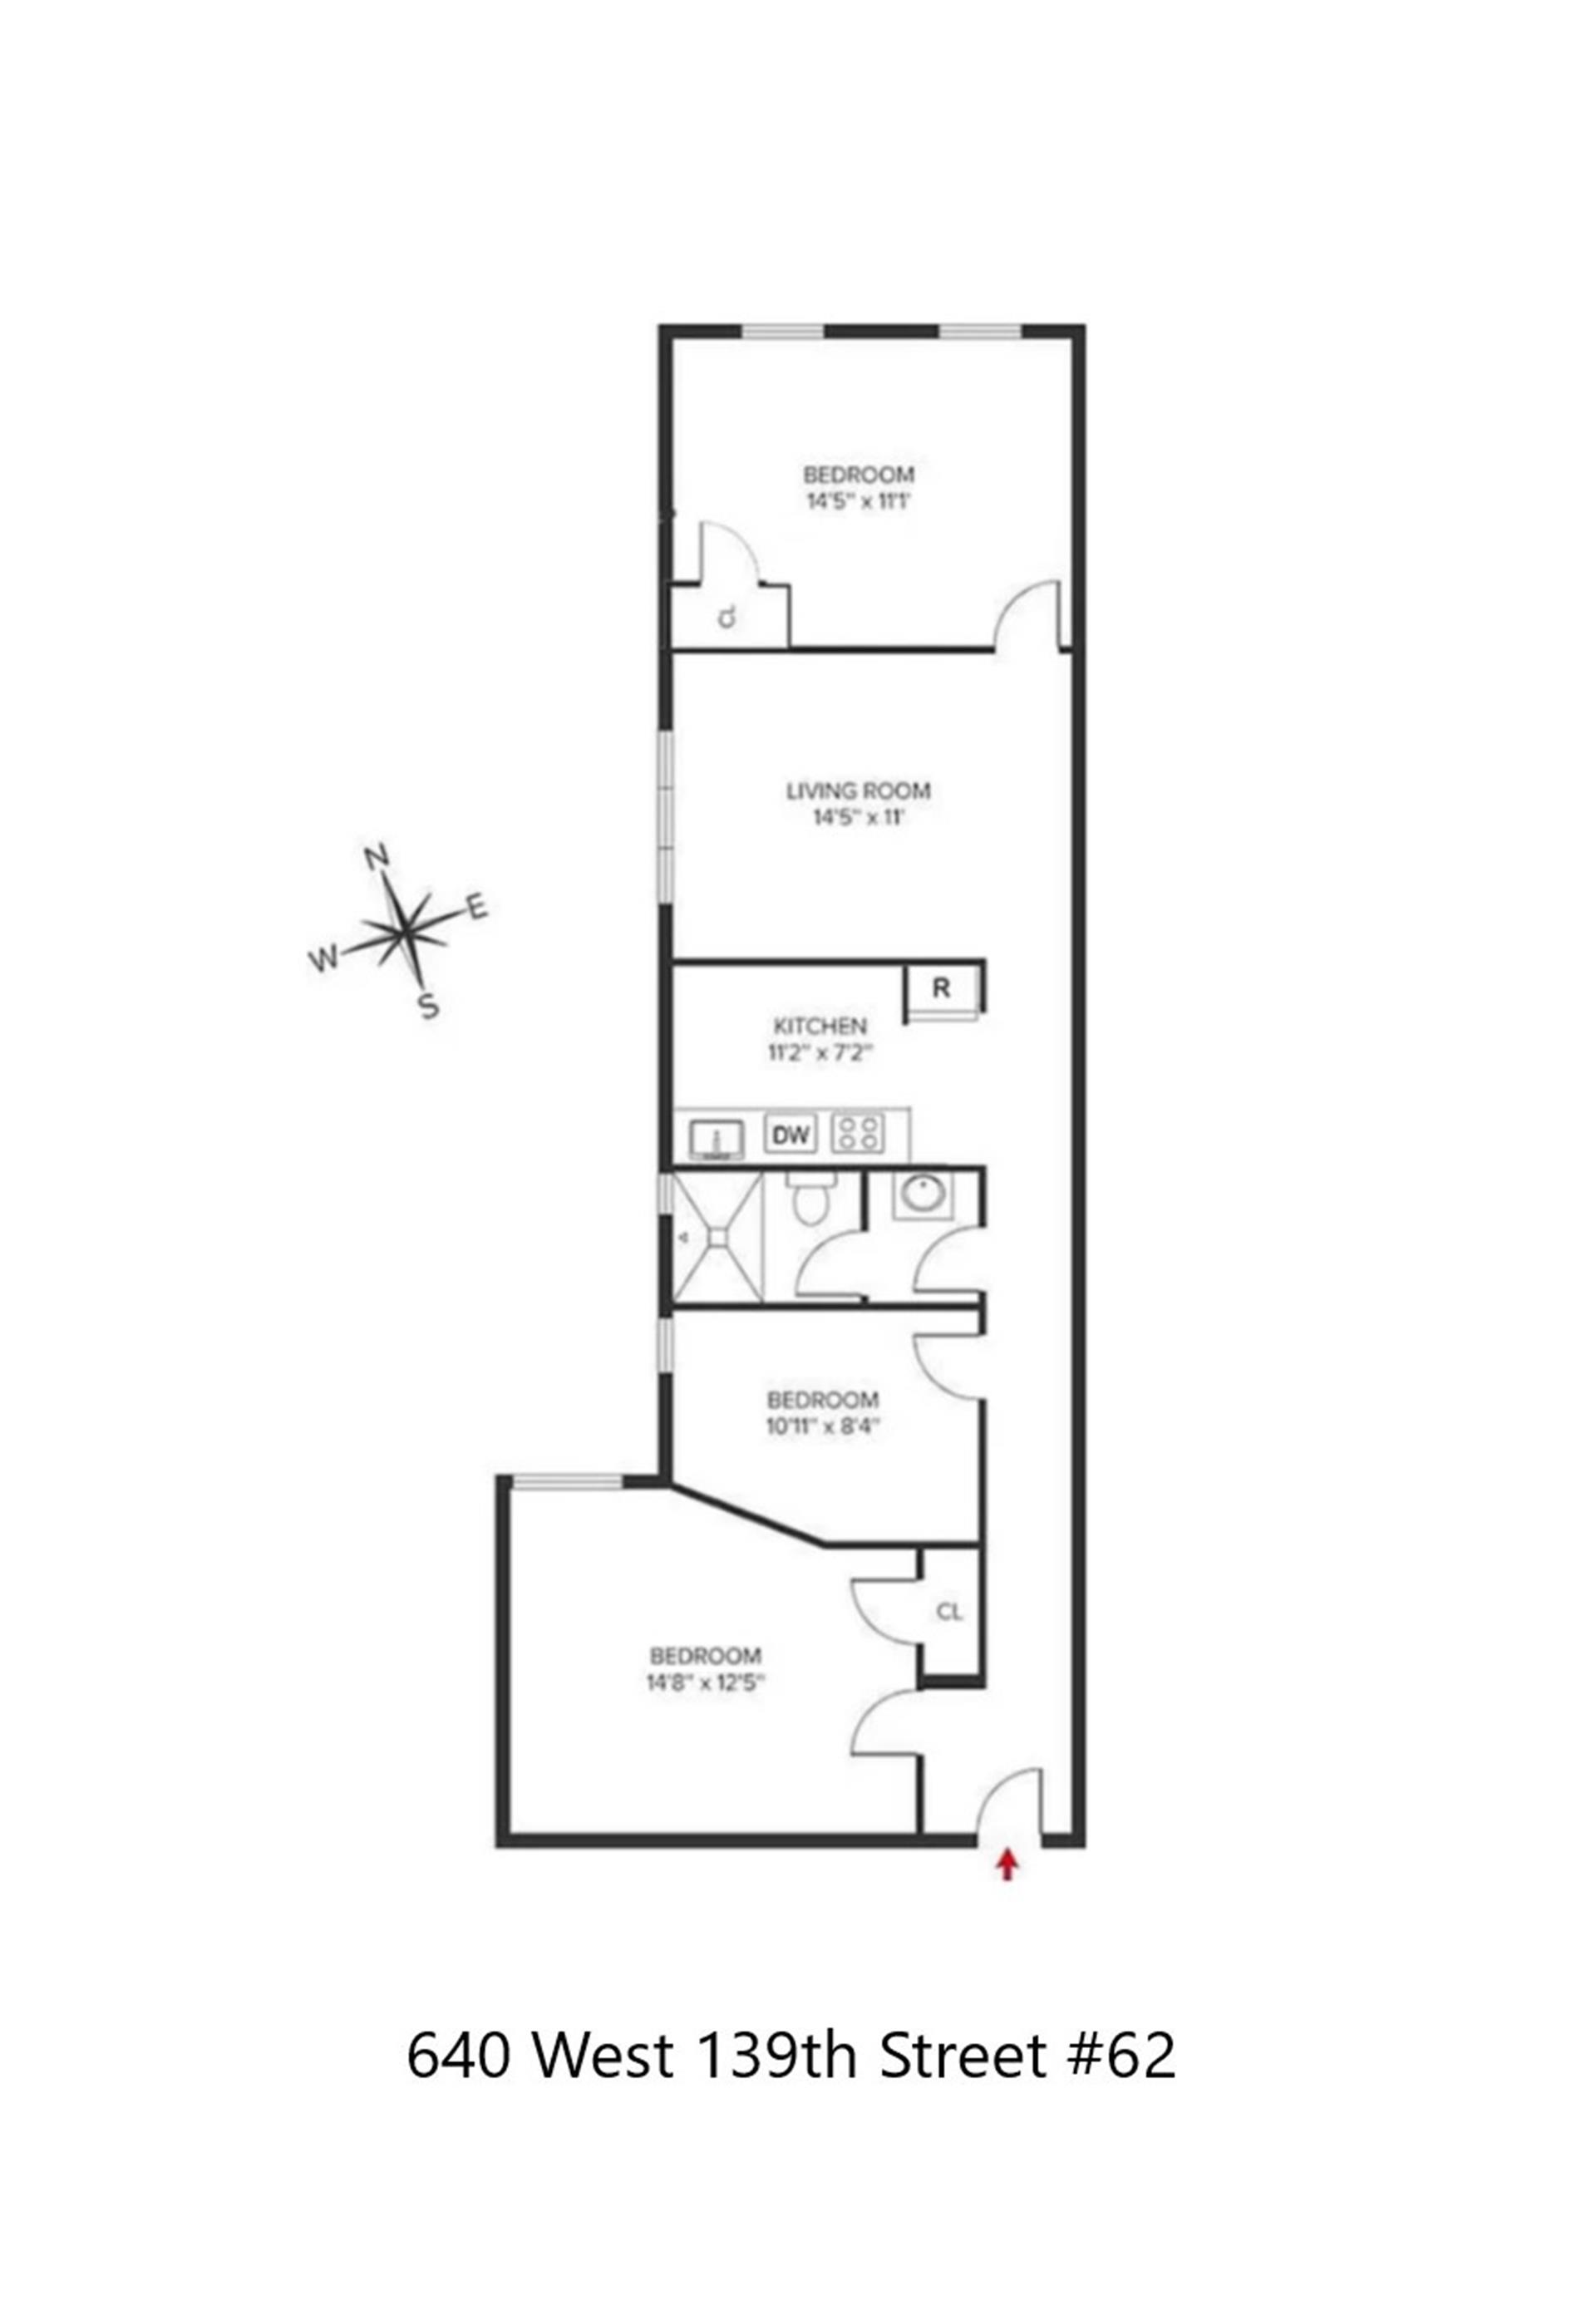 Floorplan for 640 West 139th Street, 62